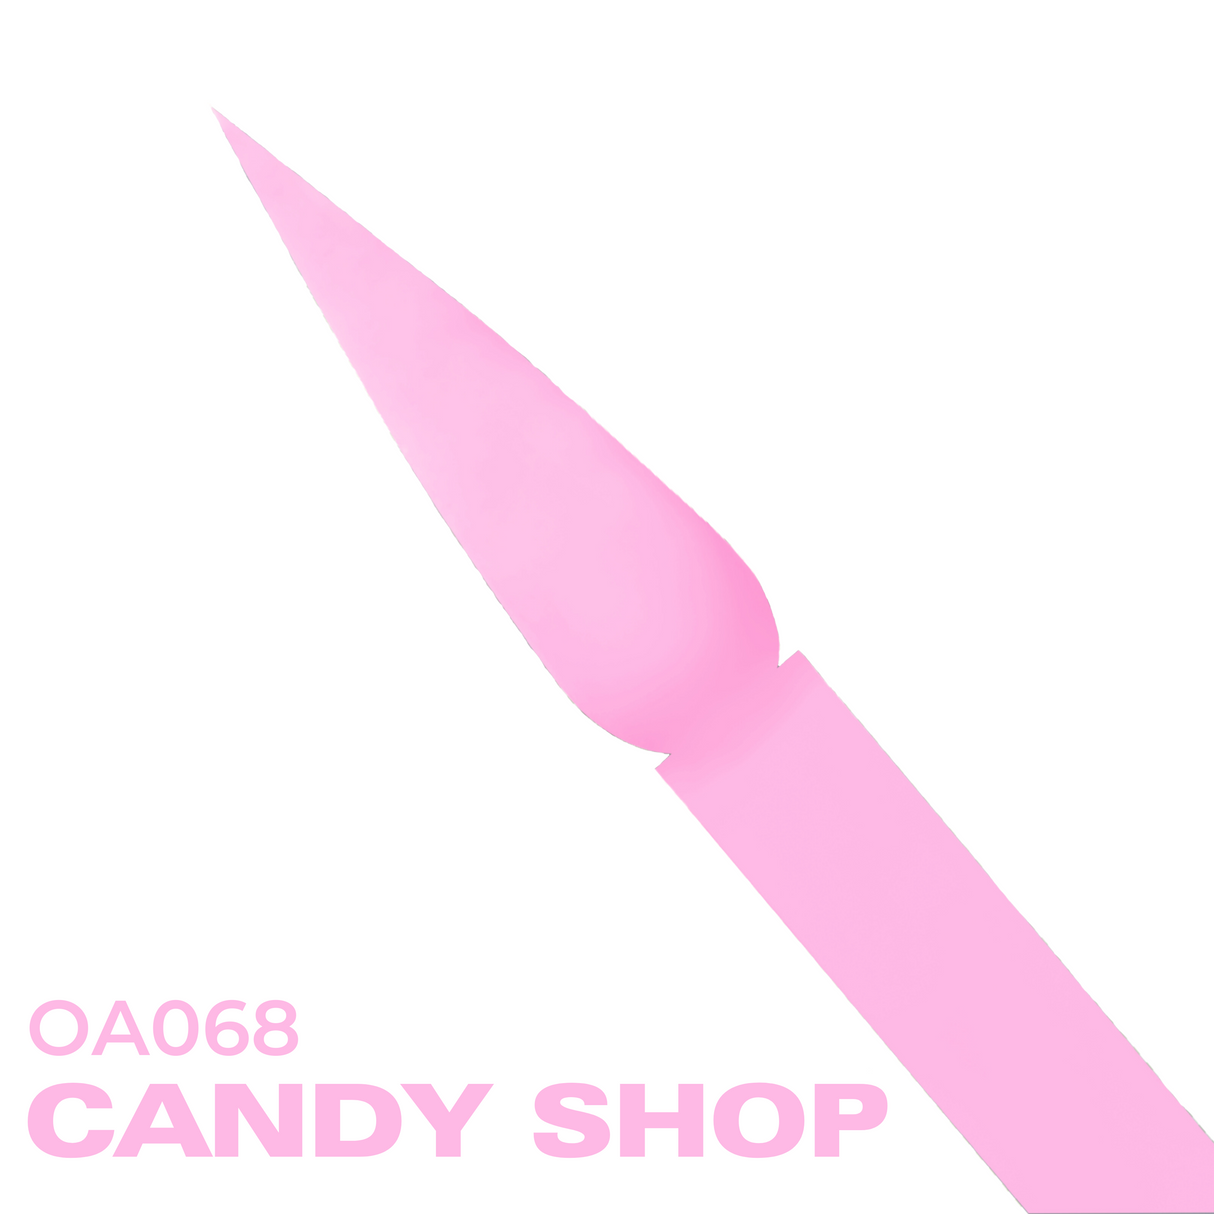 Oulà Acrylic Powder OA068 Candy Shop